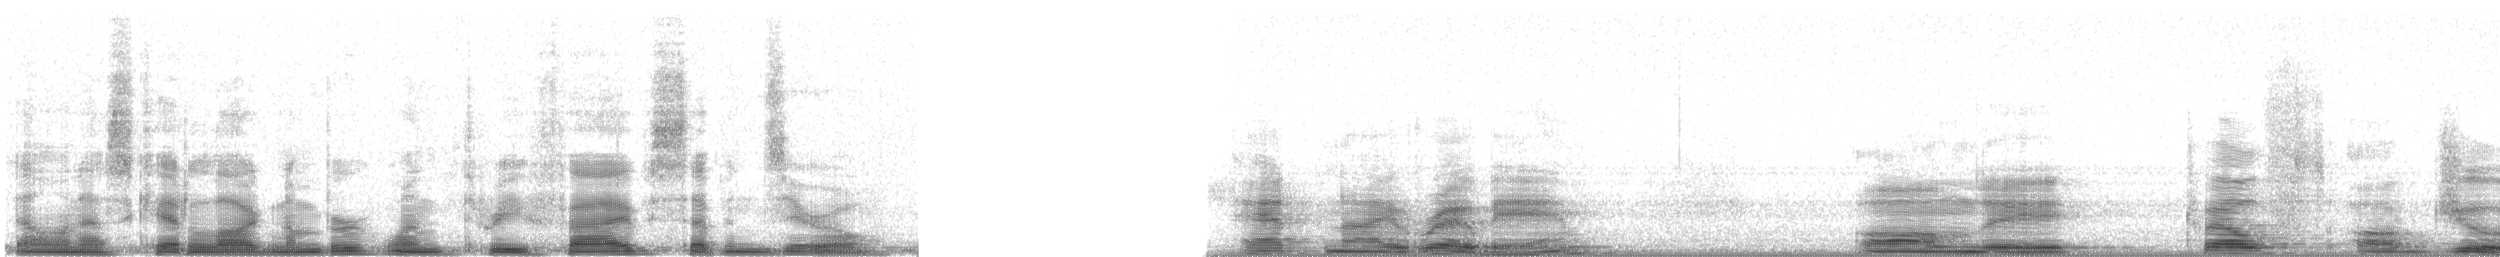 Habeş Ardıcı [abyssinicus grubu] - ML13570